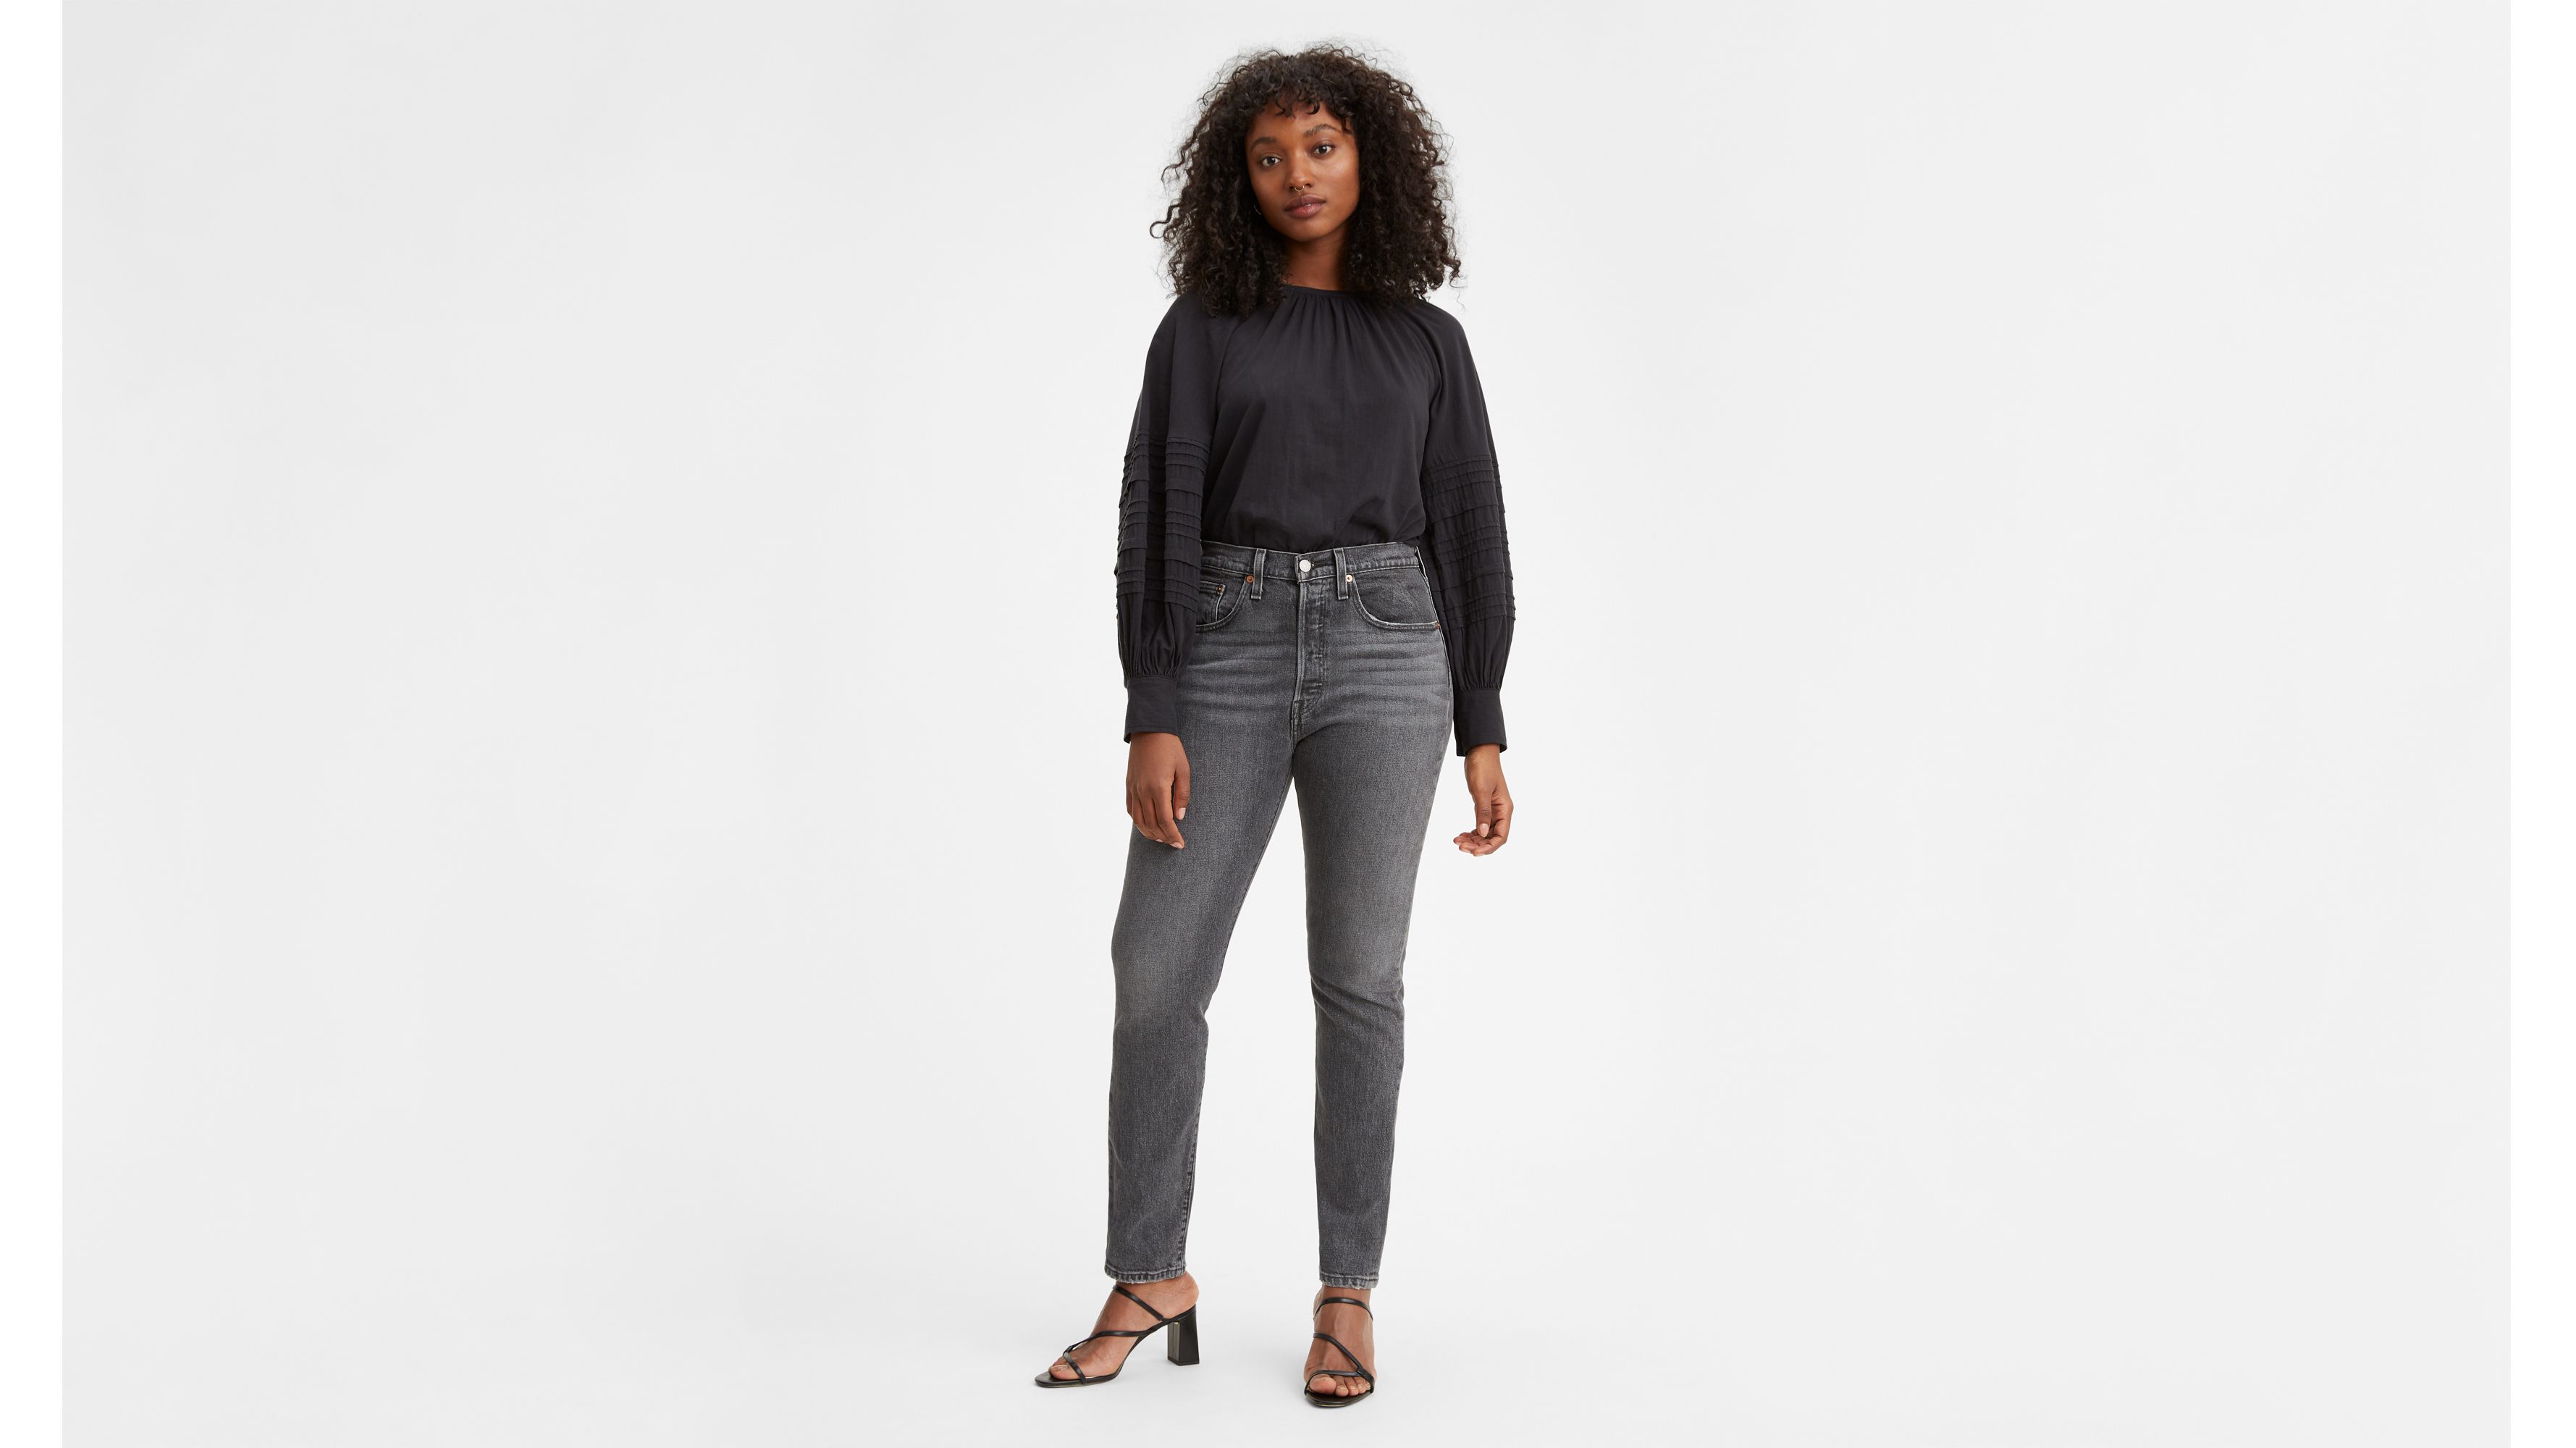 women's gray denim jeans